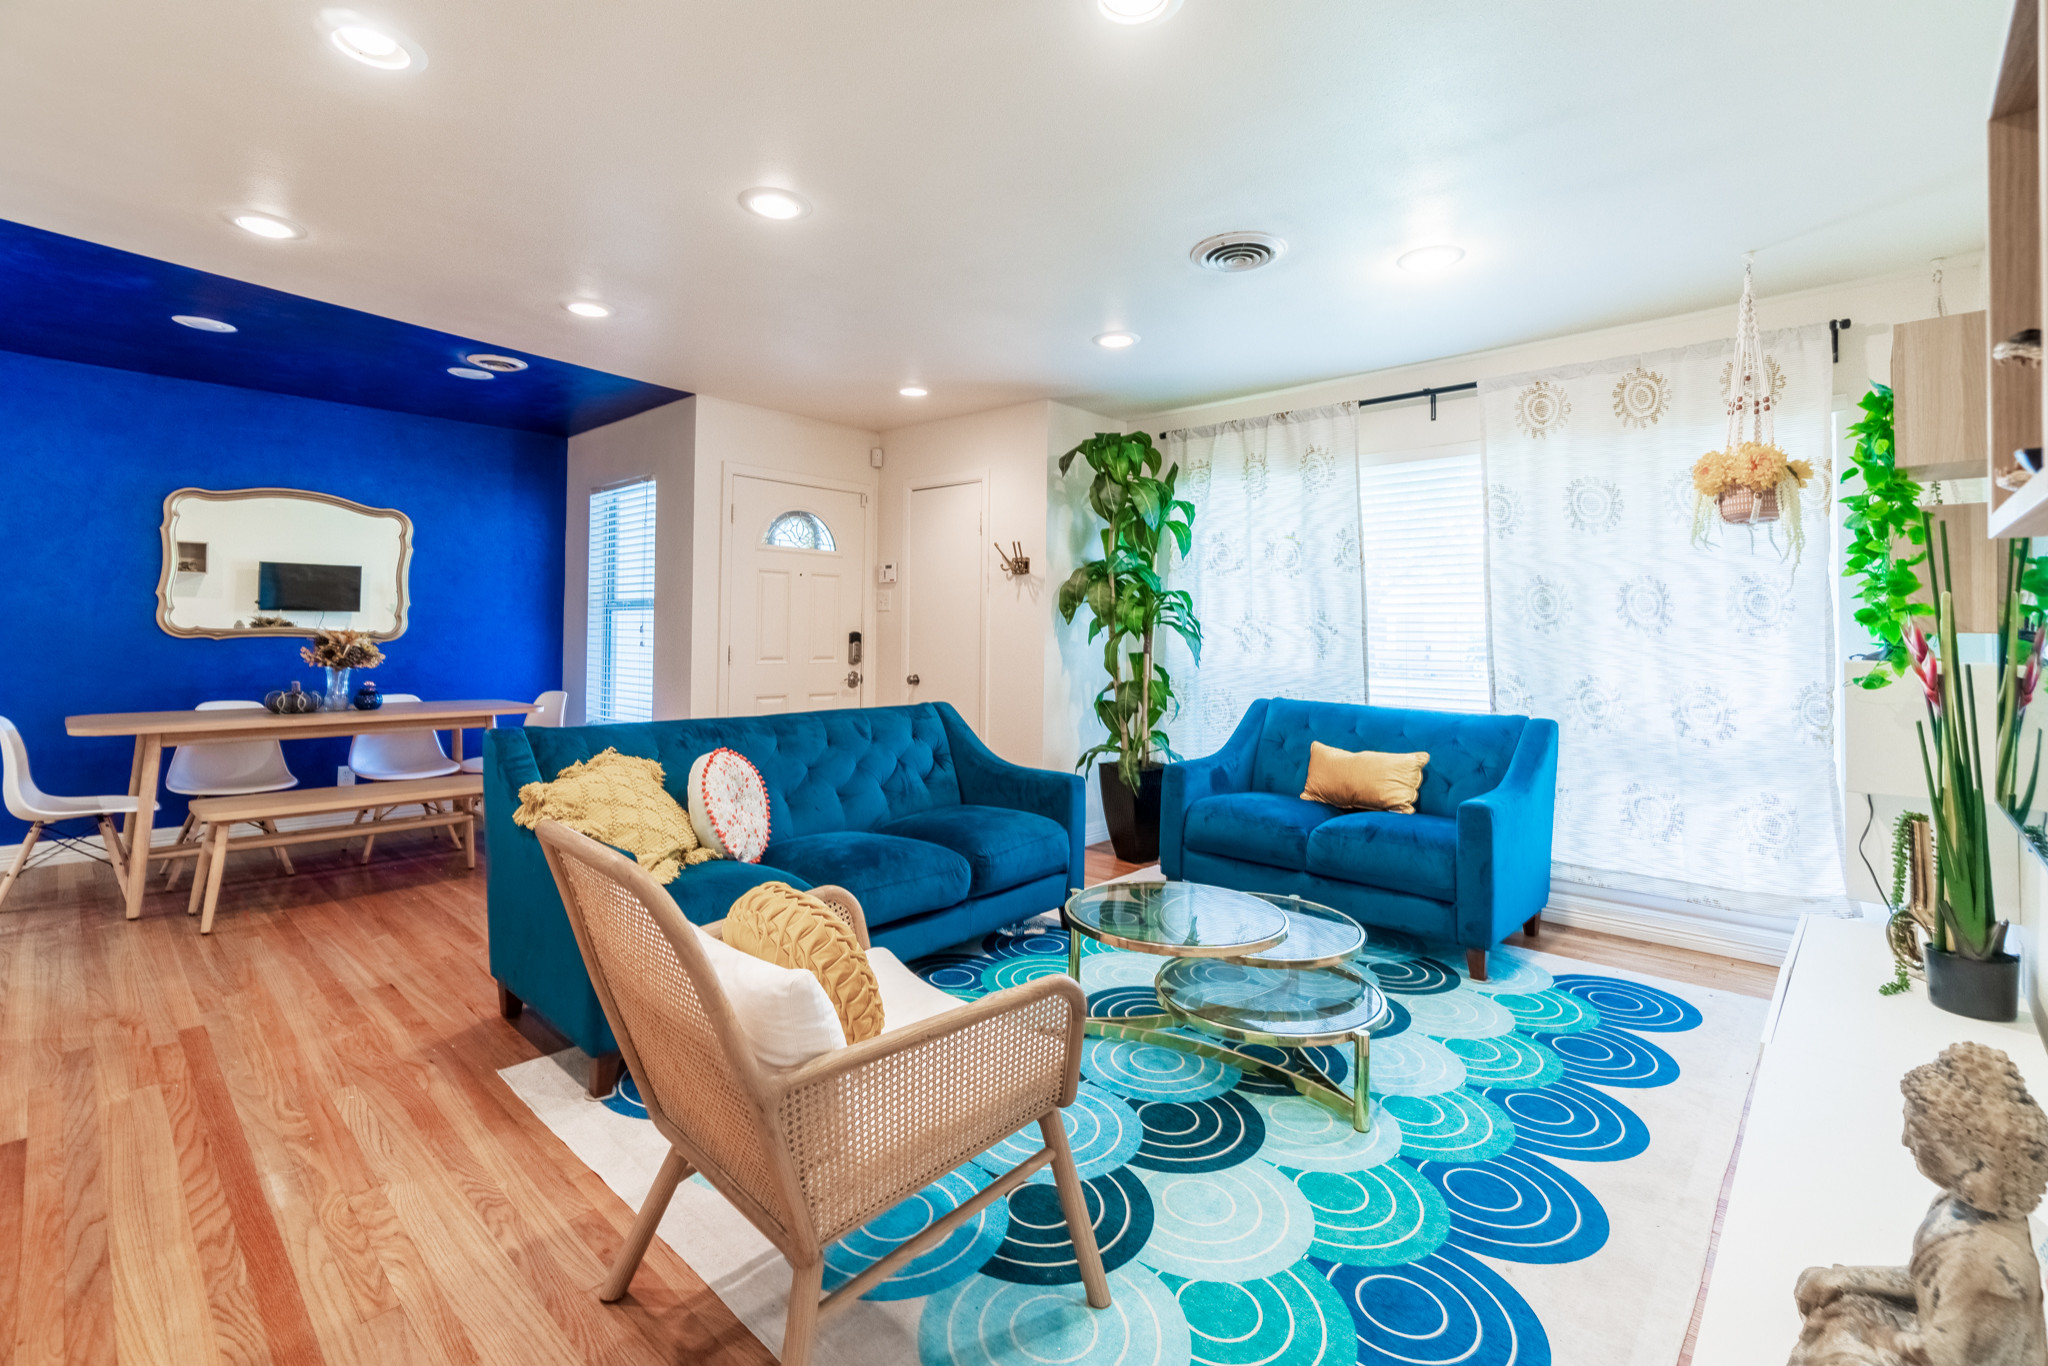 Colorful Maximalist Airbnb Concept - East Dallas